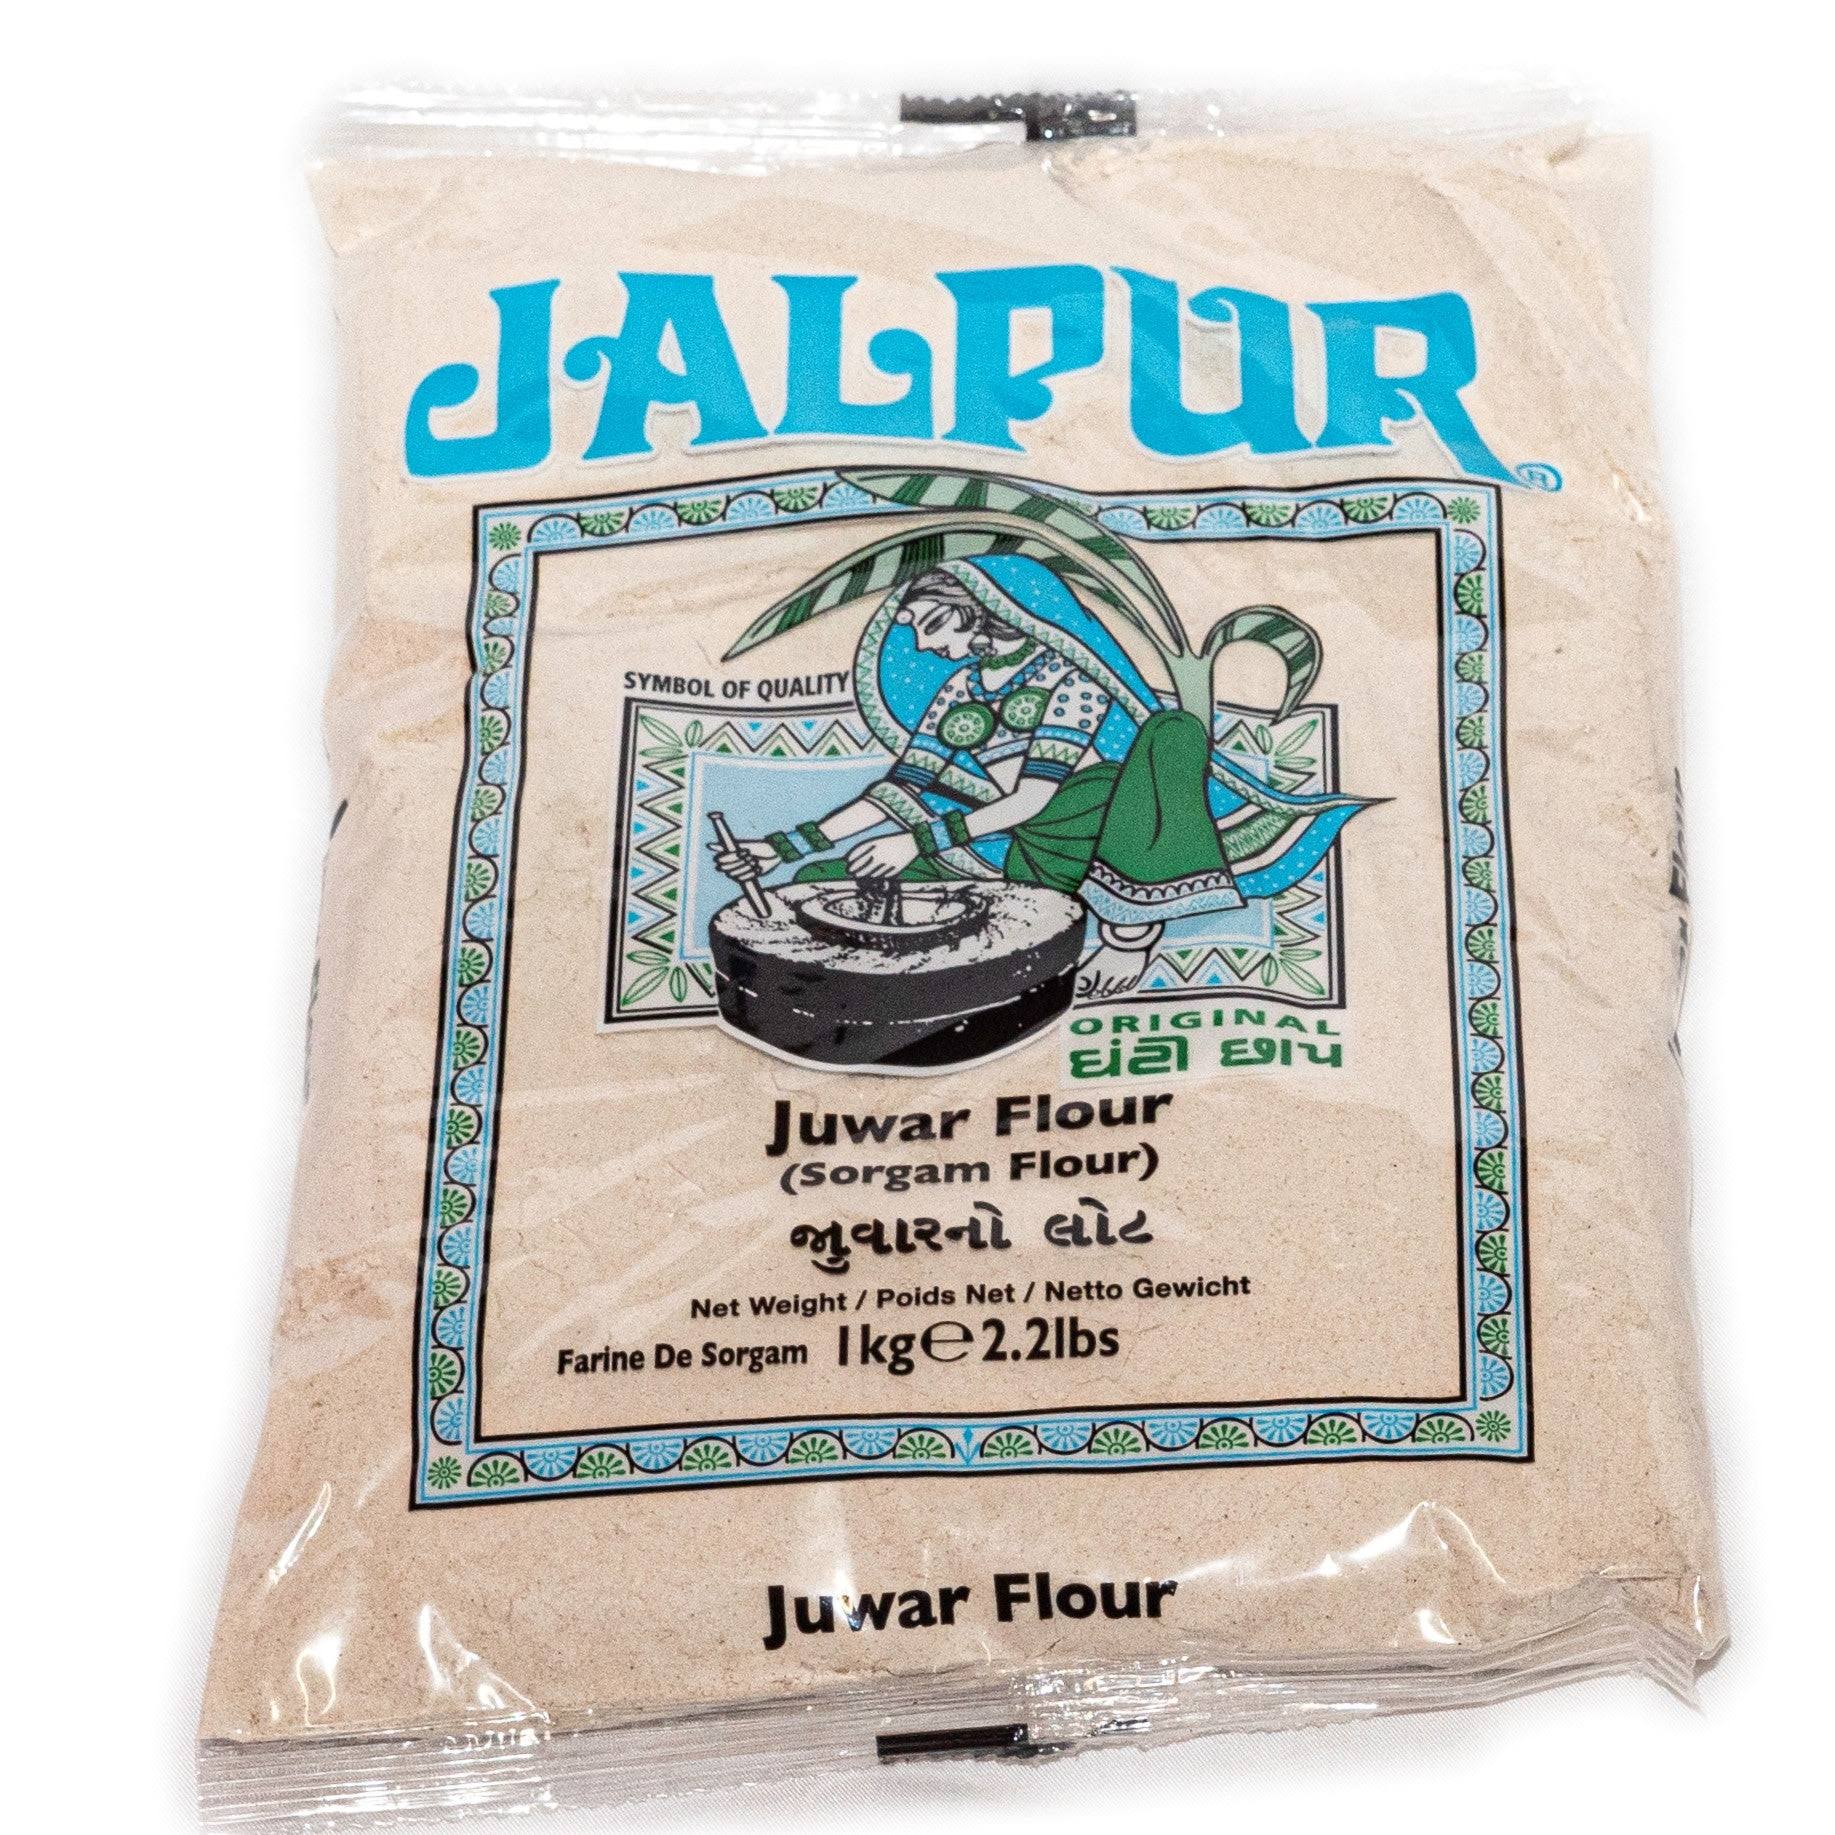 Jalpur Juwar Flour 1 kg